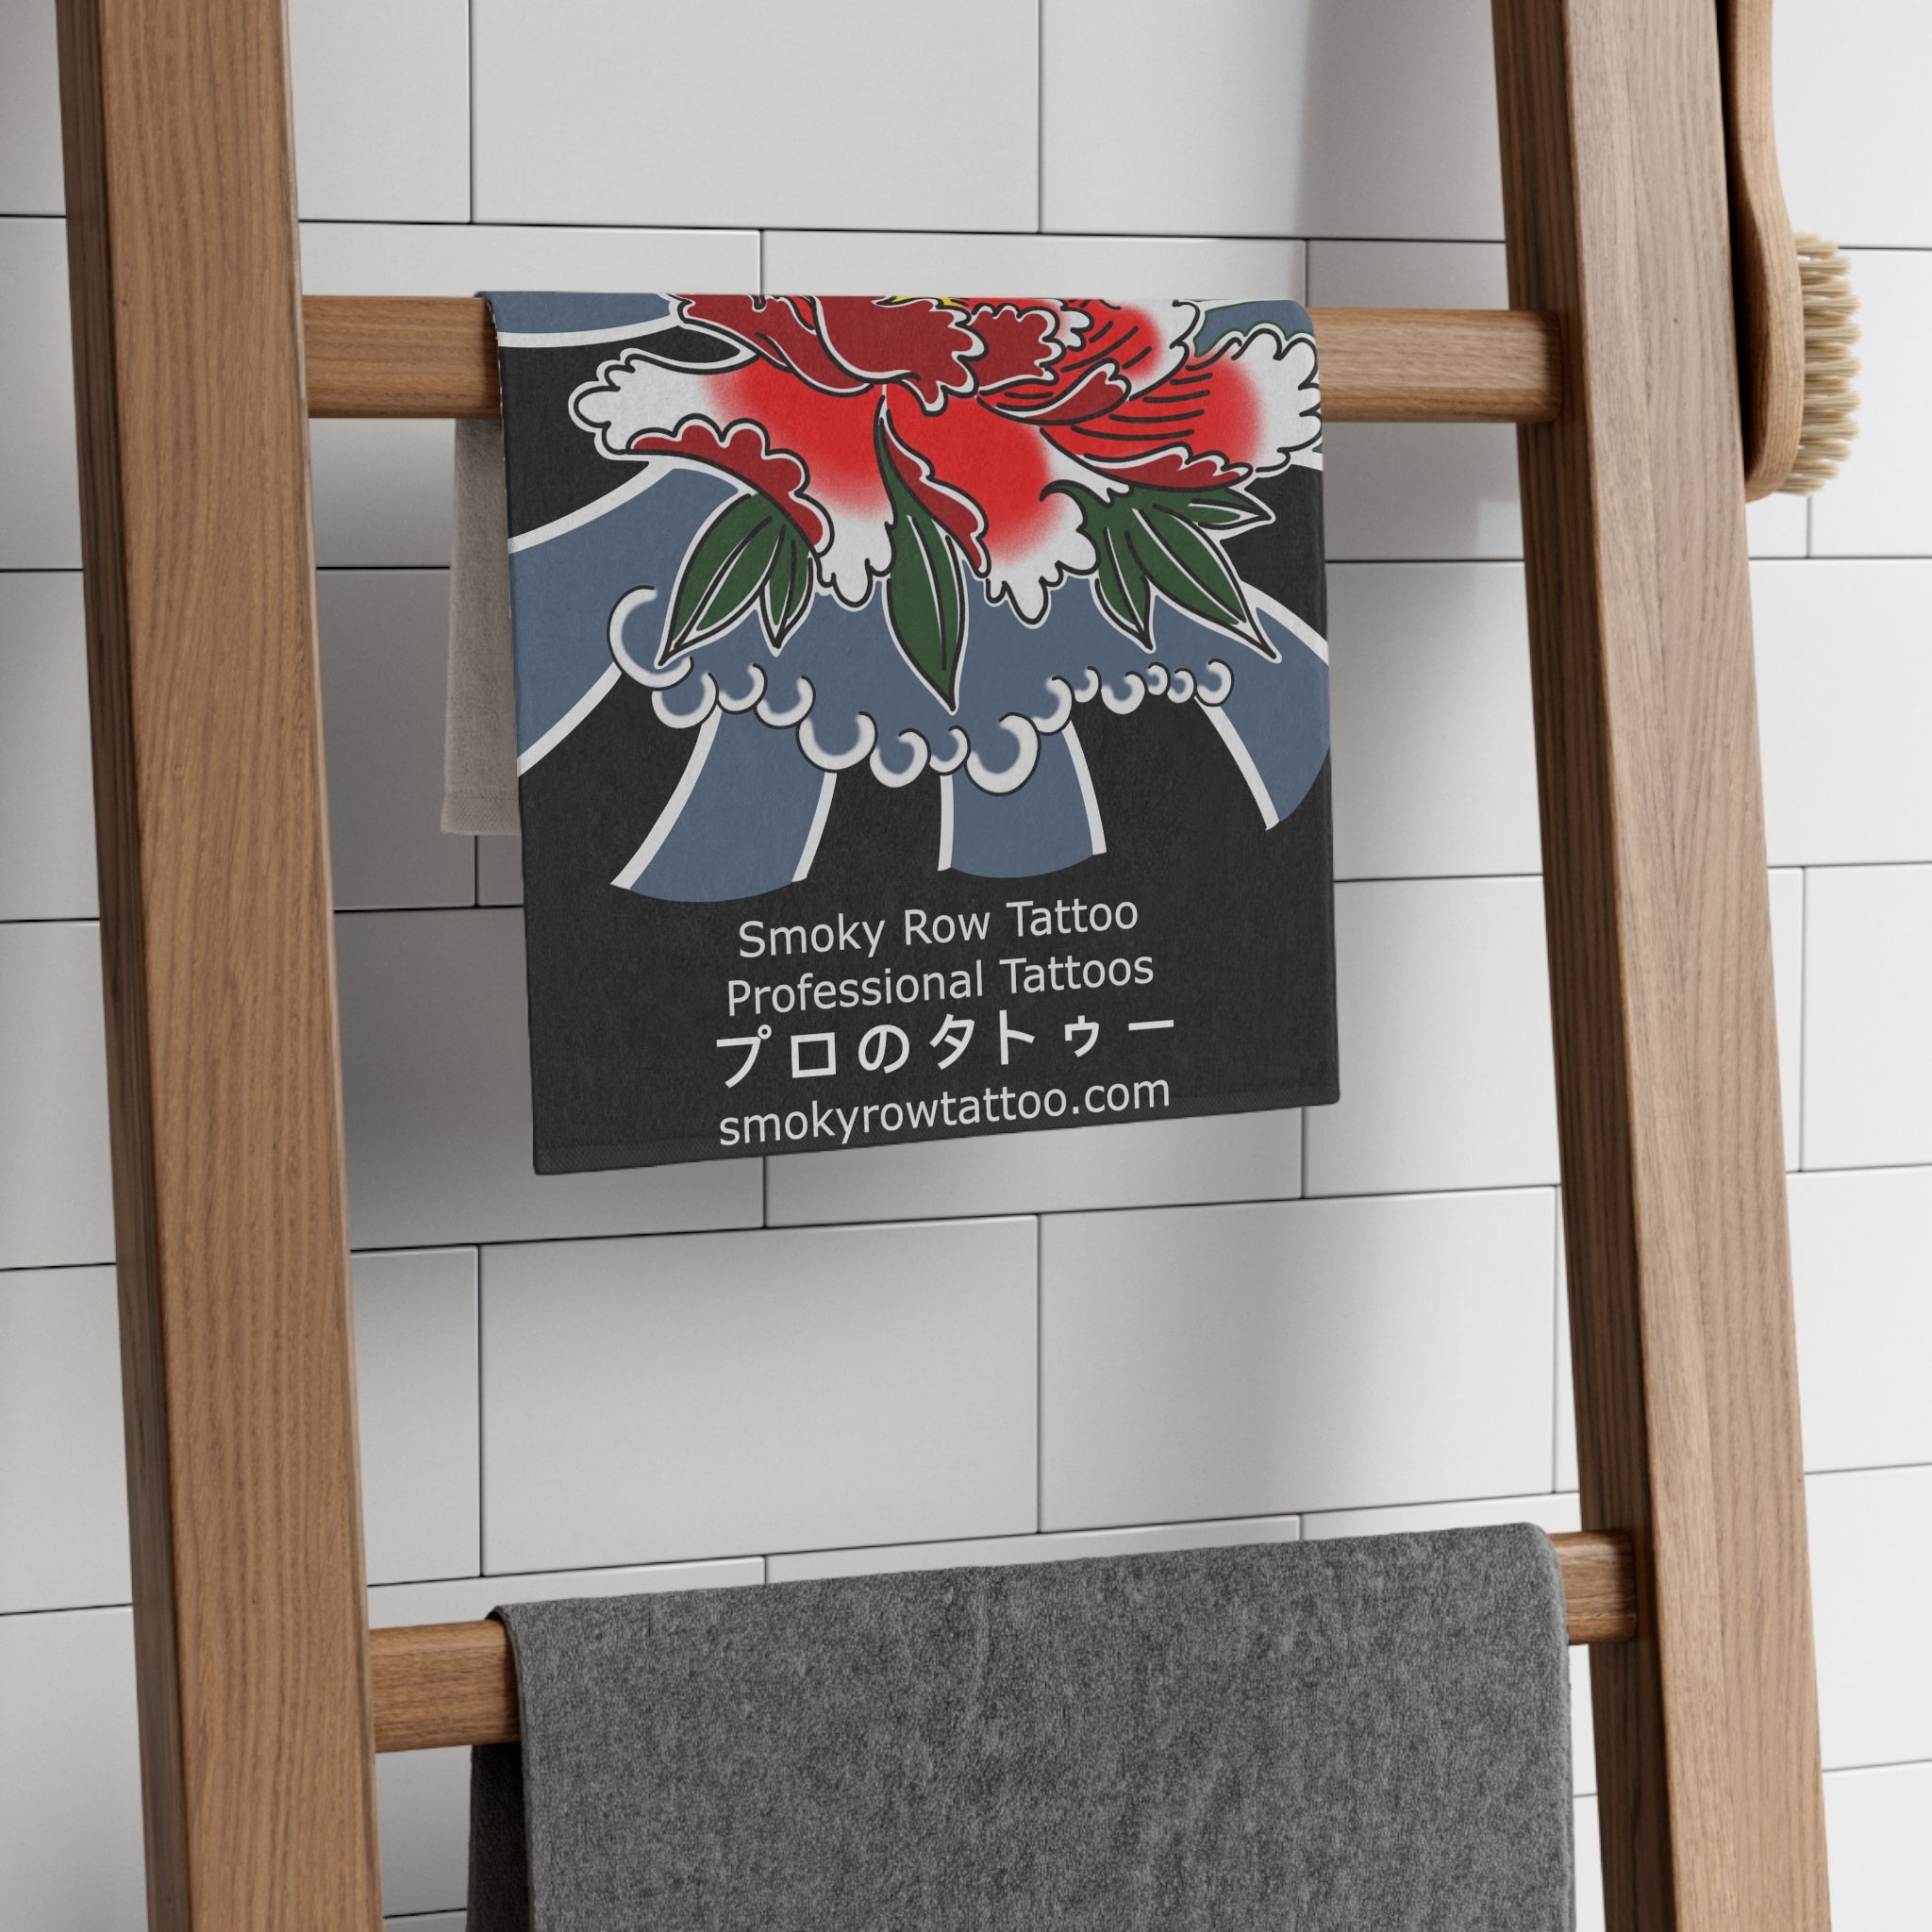 SRT Chrysanthemum Rally Towel, 11x18